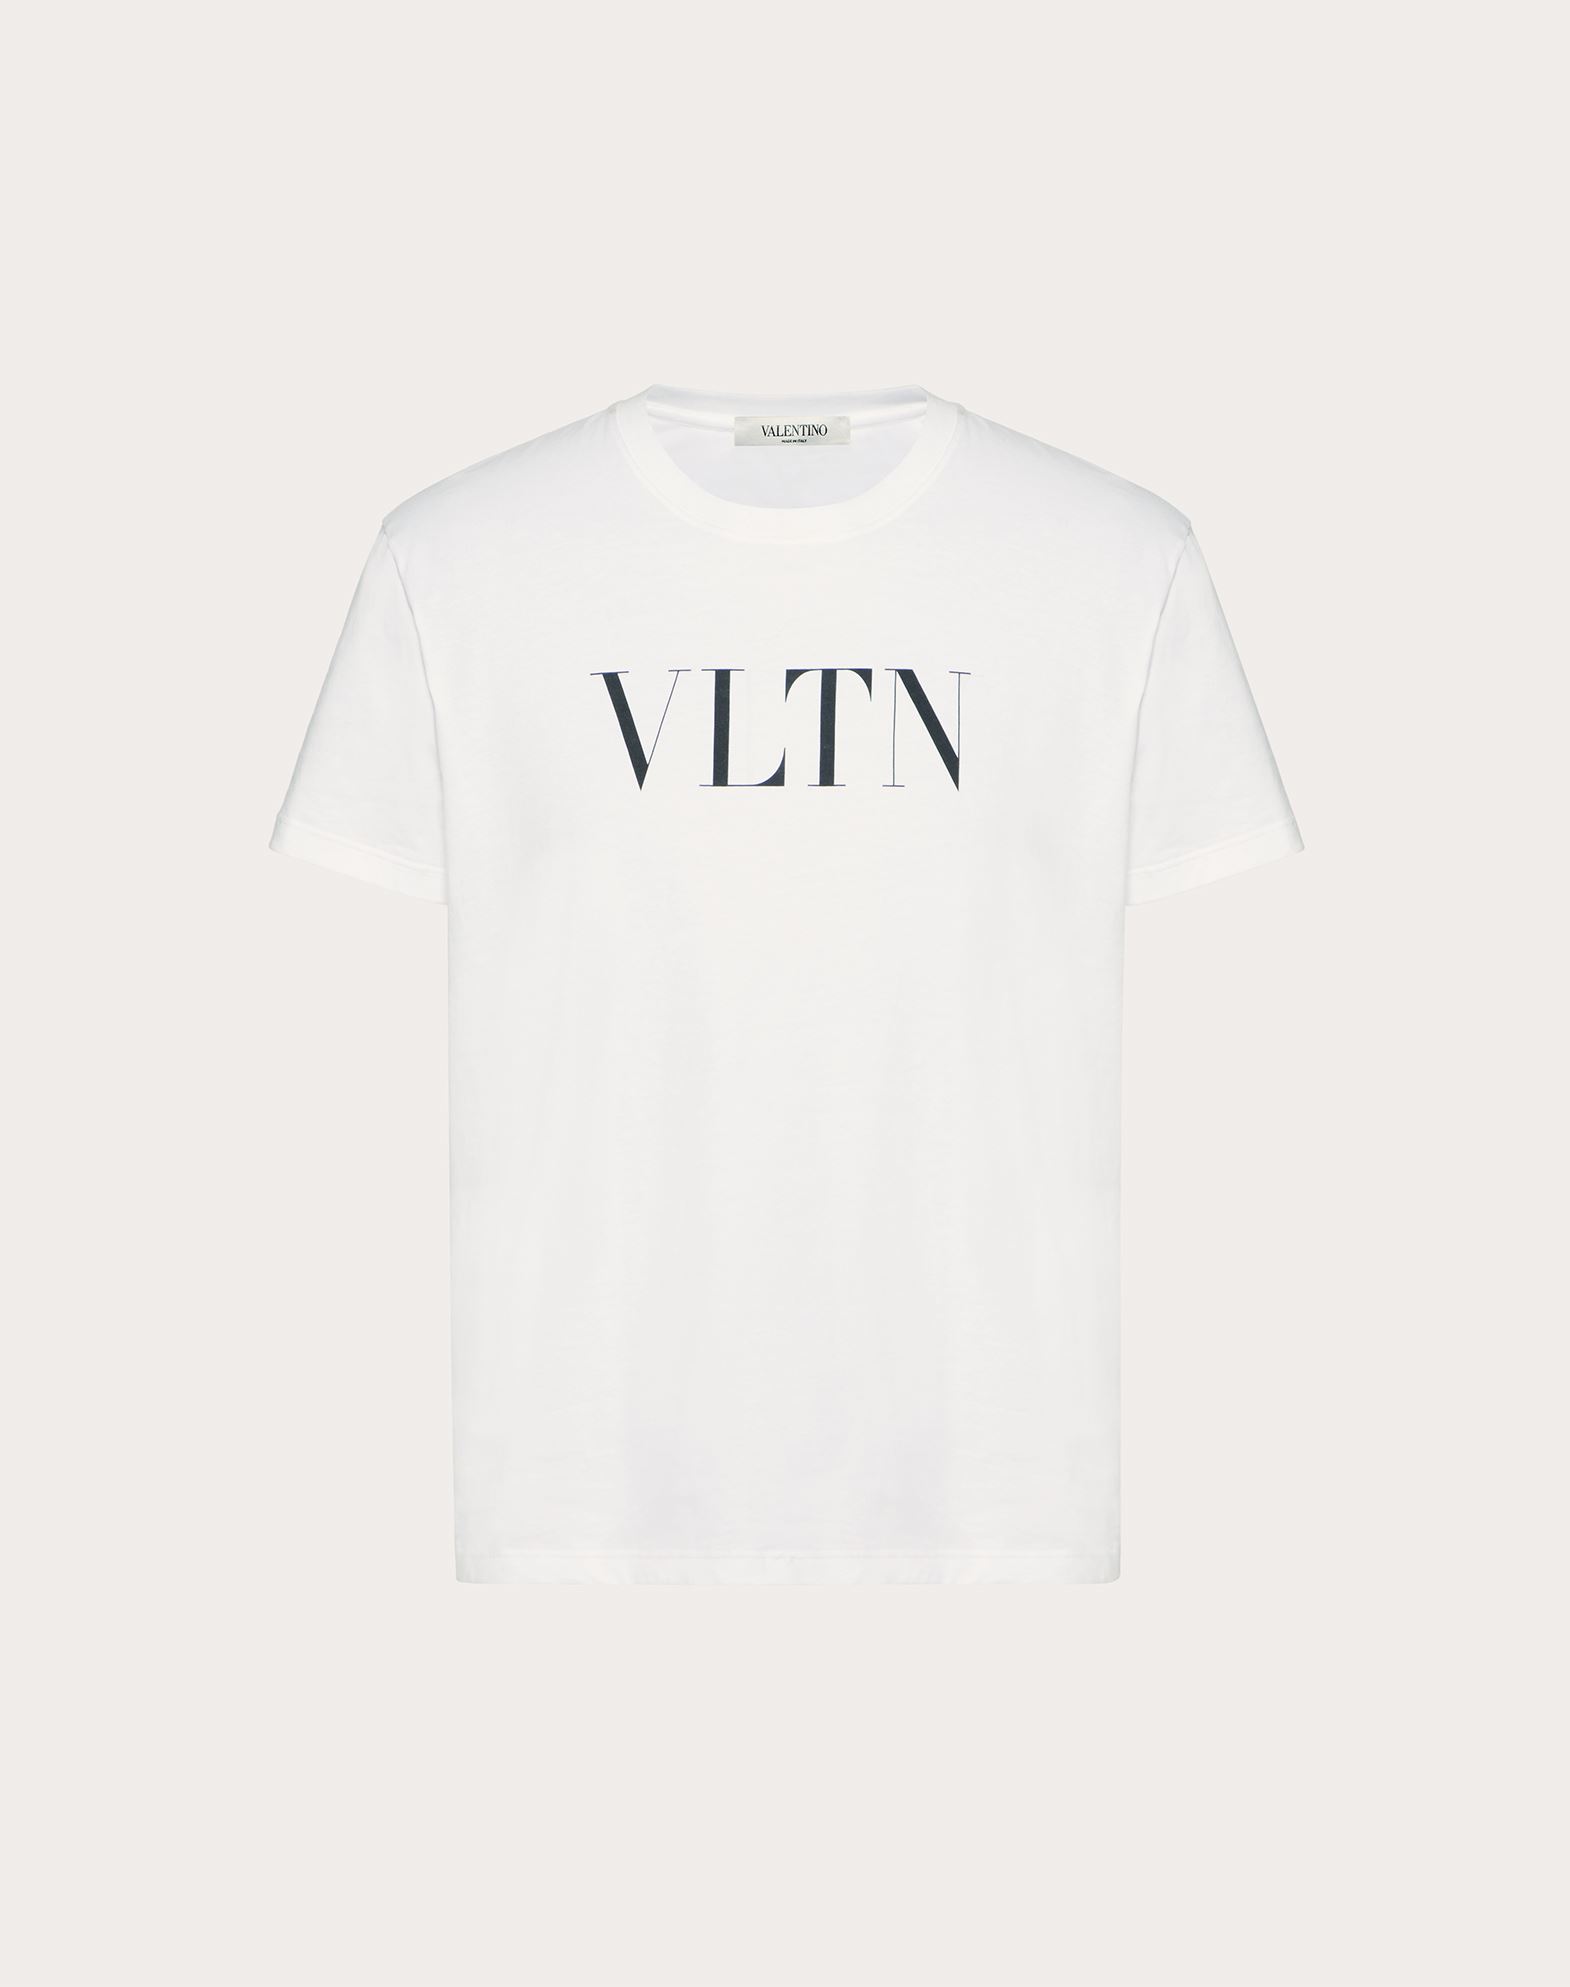 Valentino White T Shirt on Sale, UP TO 55% OFF | www.bravoplaya.com